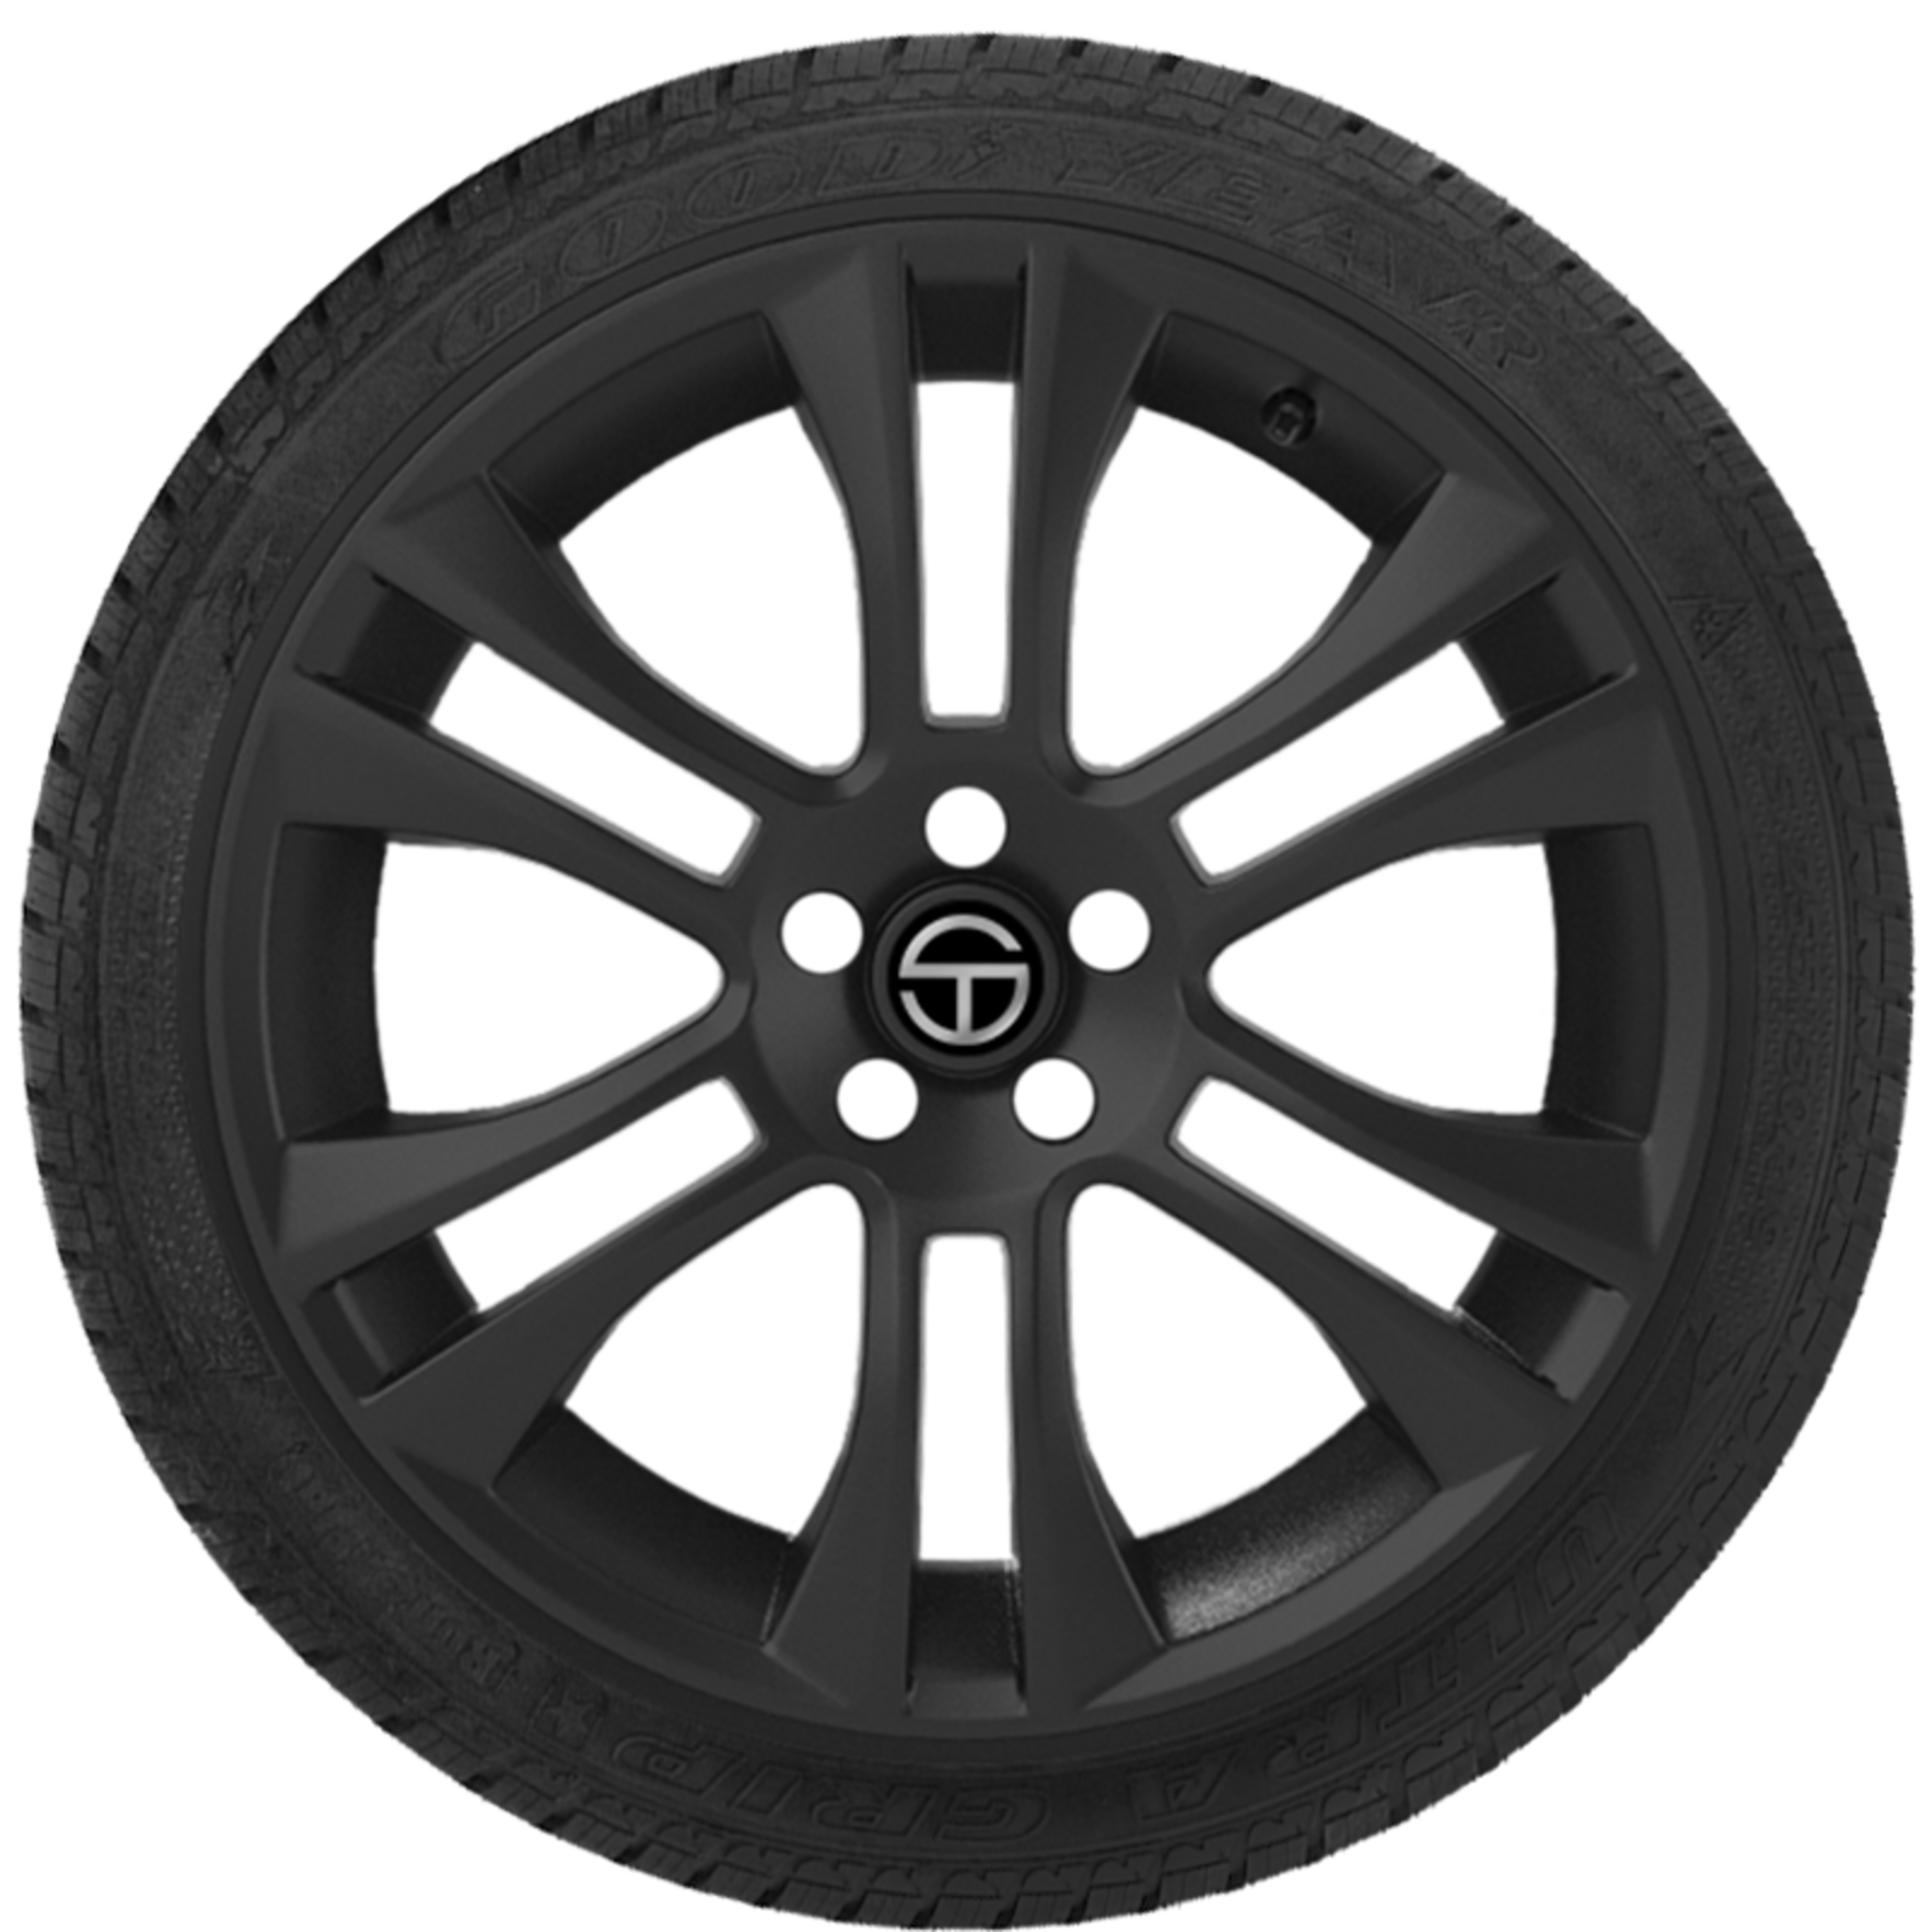 SUV SimpleTire Online Buy Ultra | Tires ROF Goodyear Grip